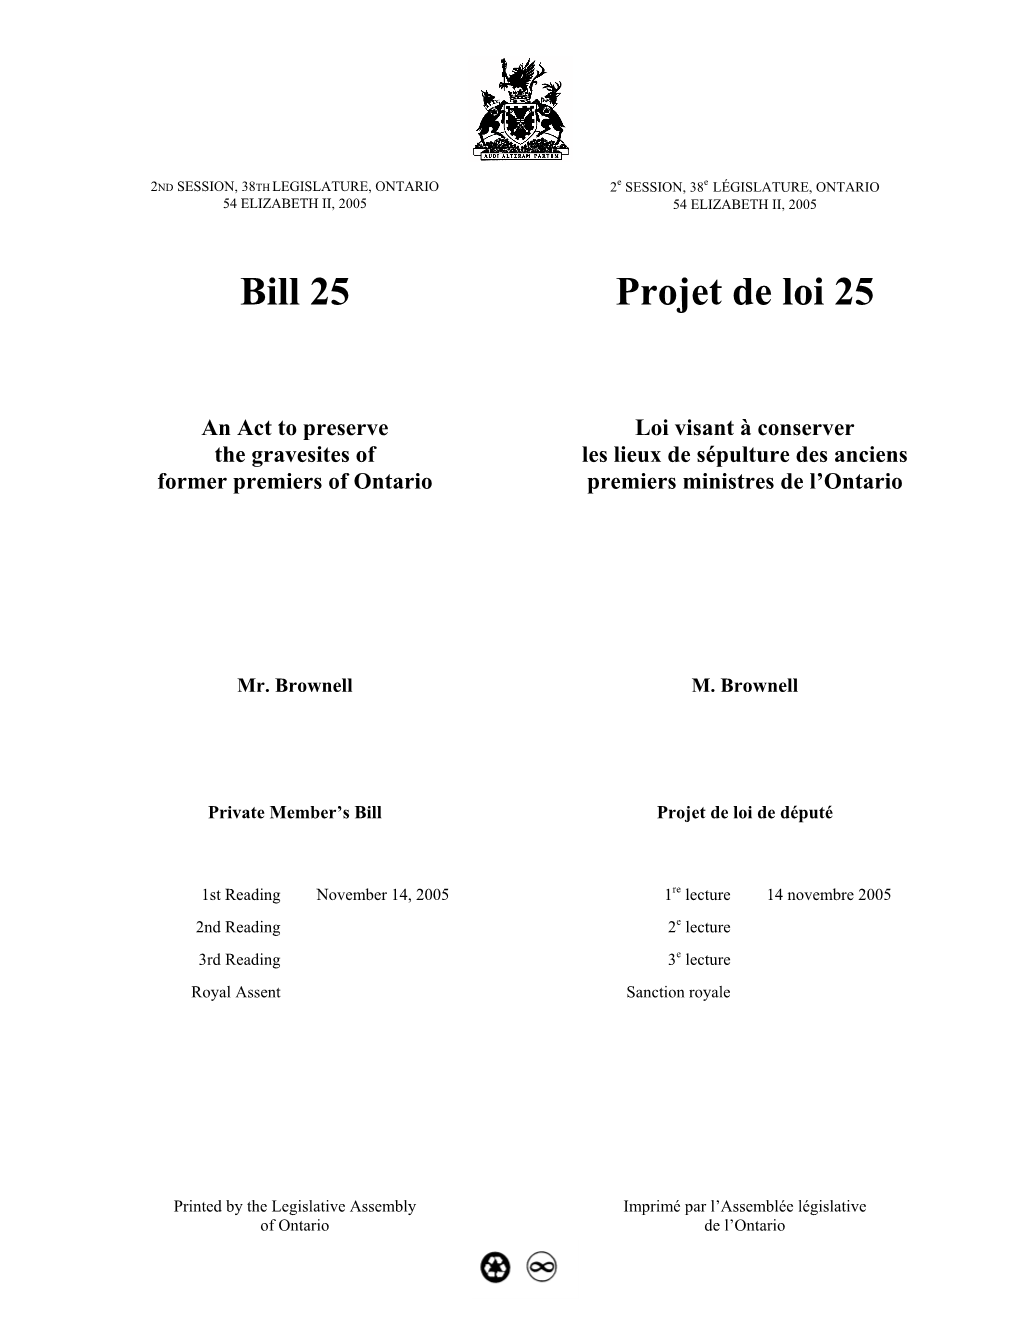 Bill 25 Projet De Loi 25